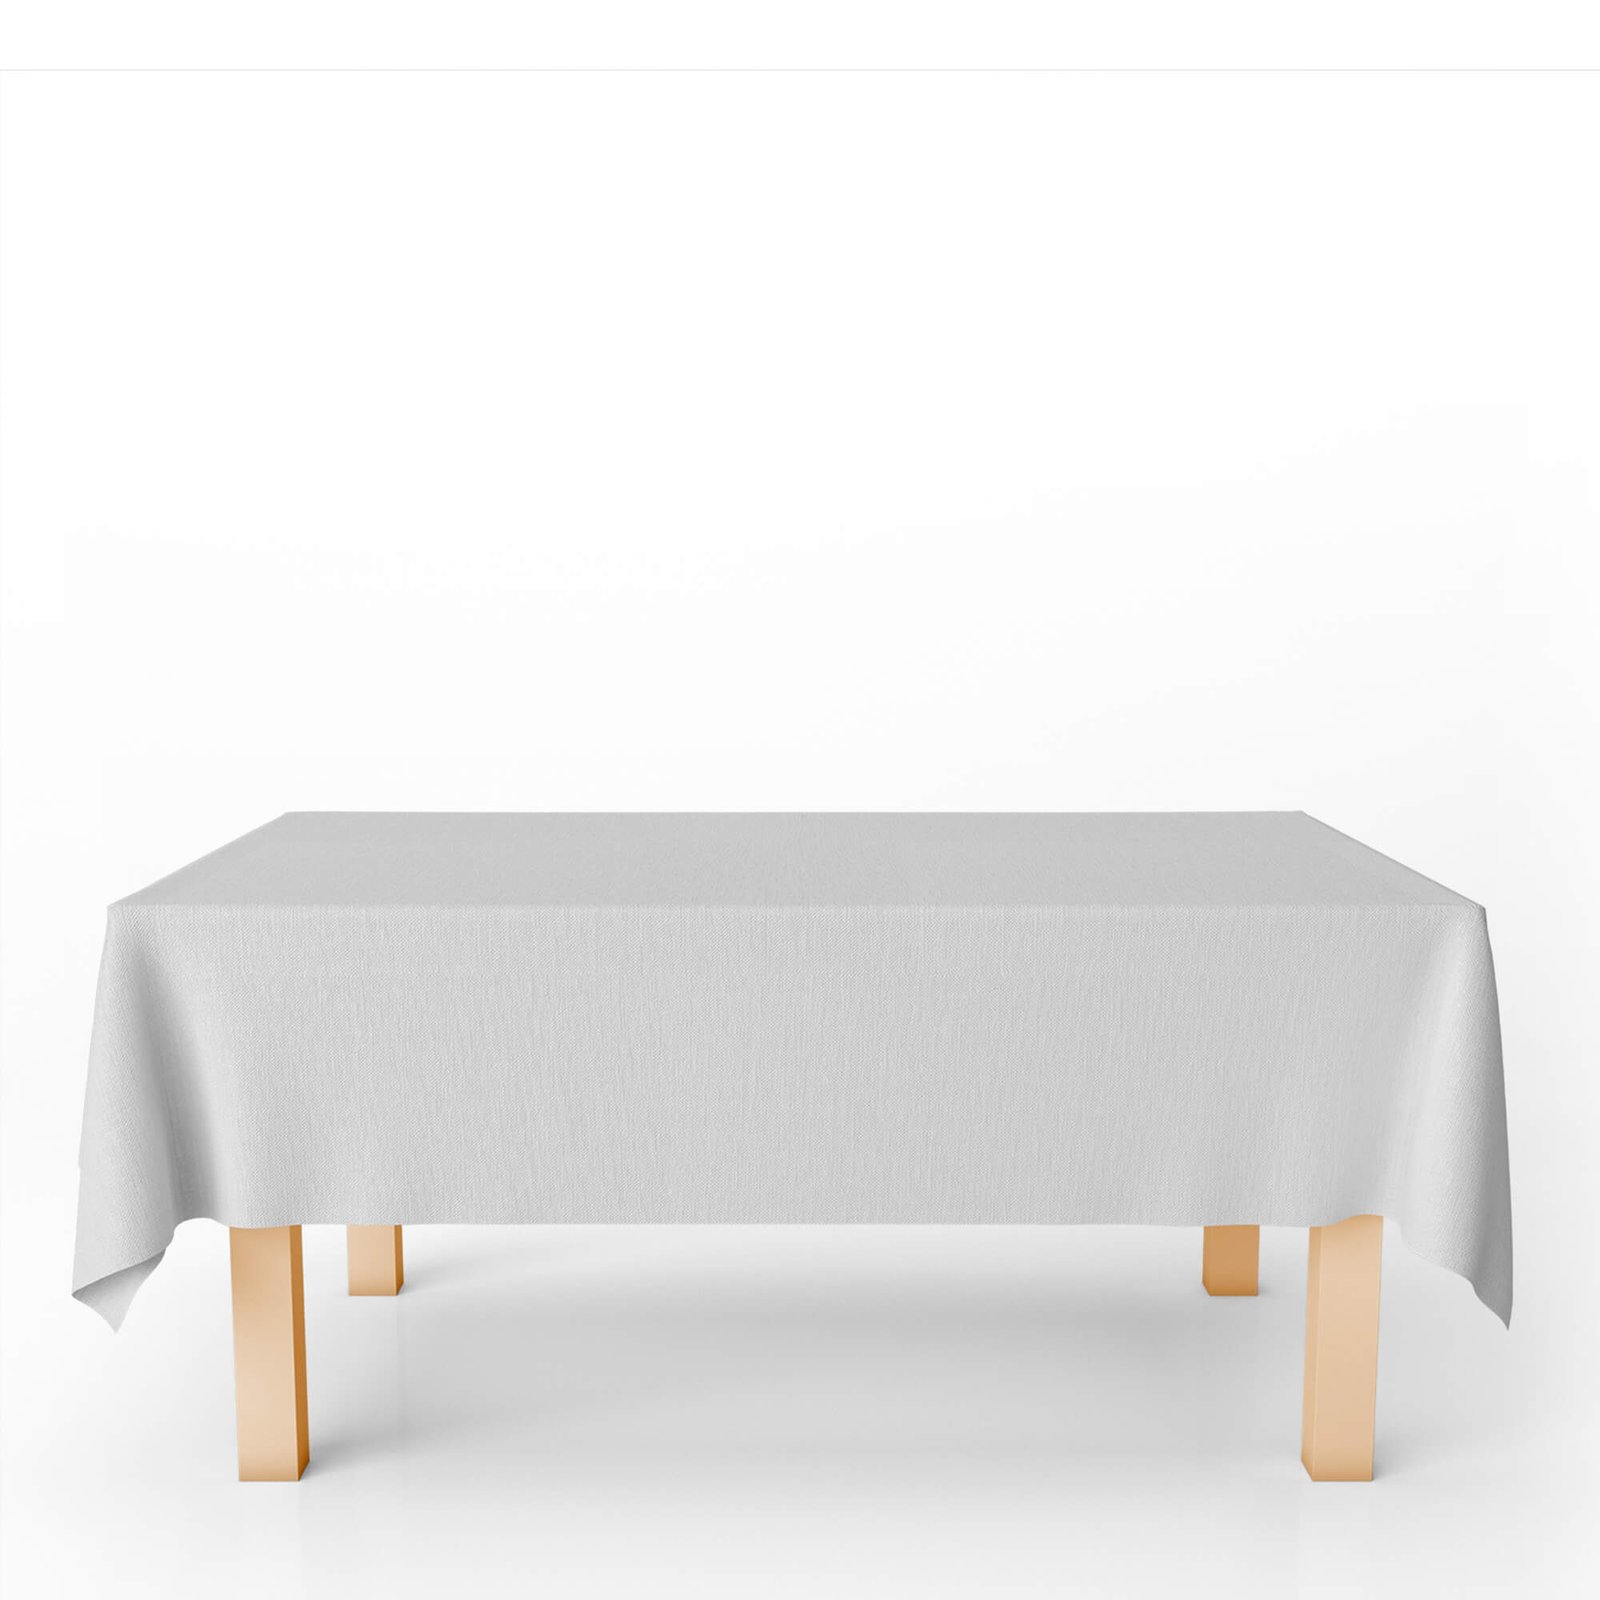 Blank Free Table Cloth Mockup PSD Template